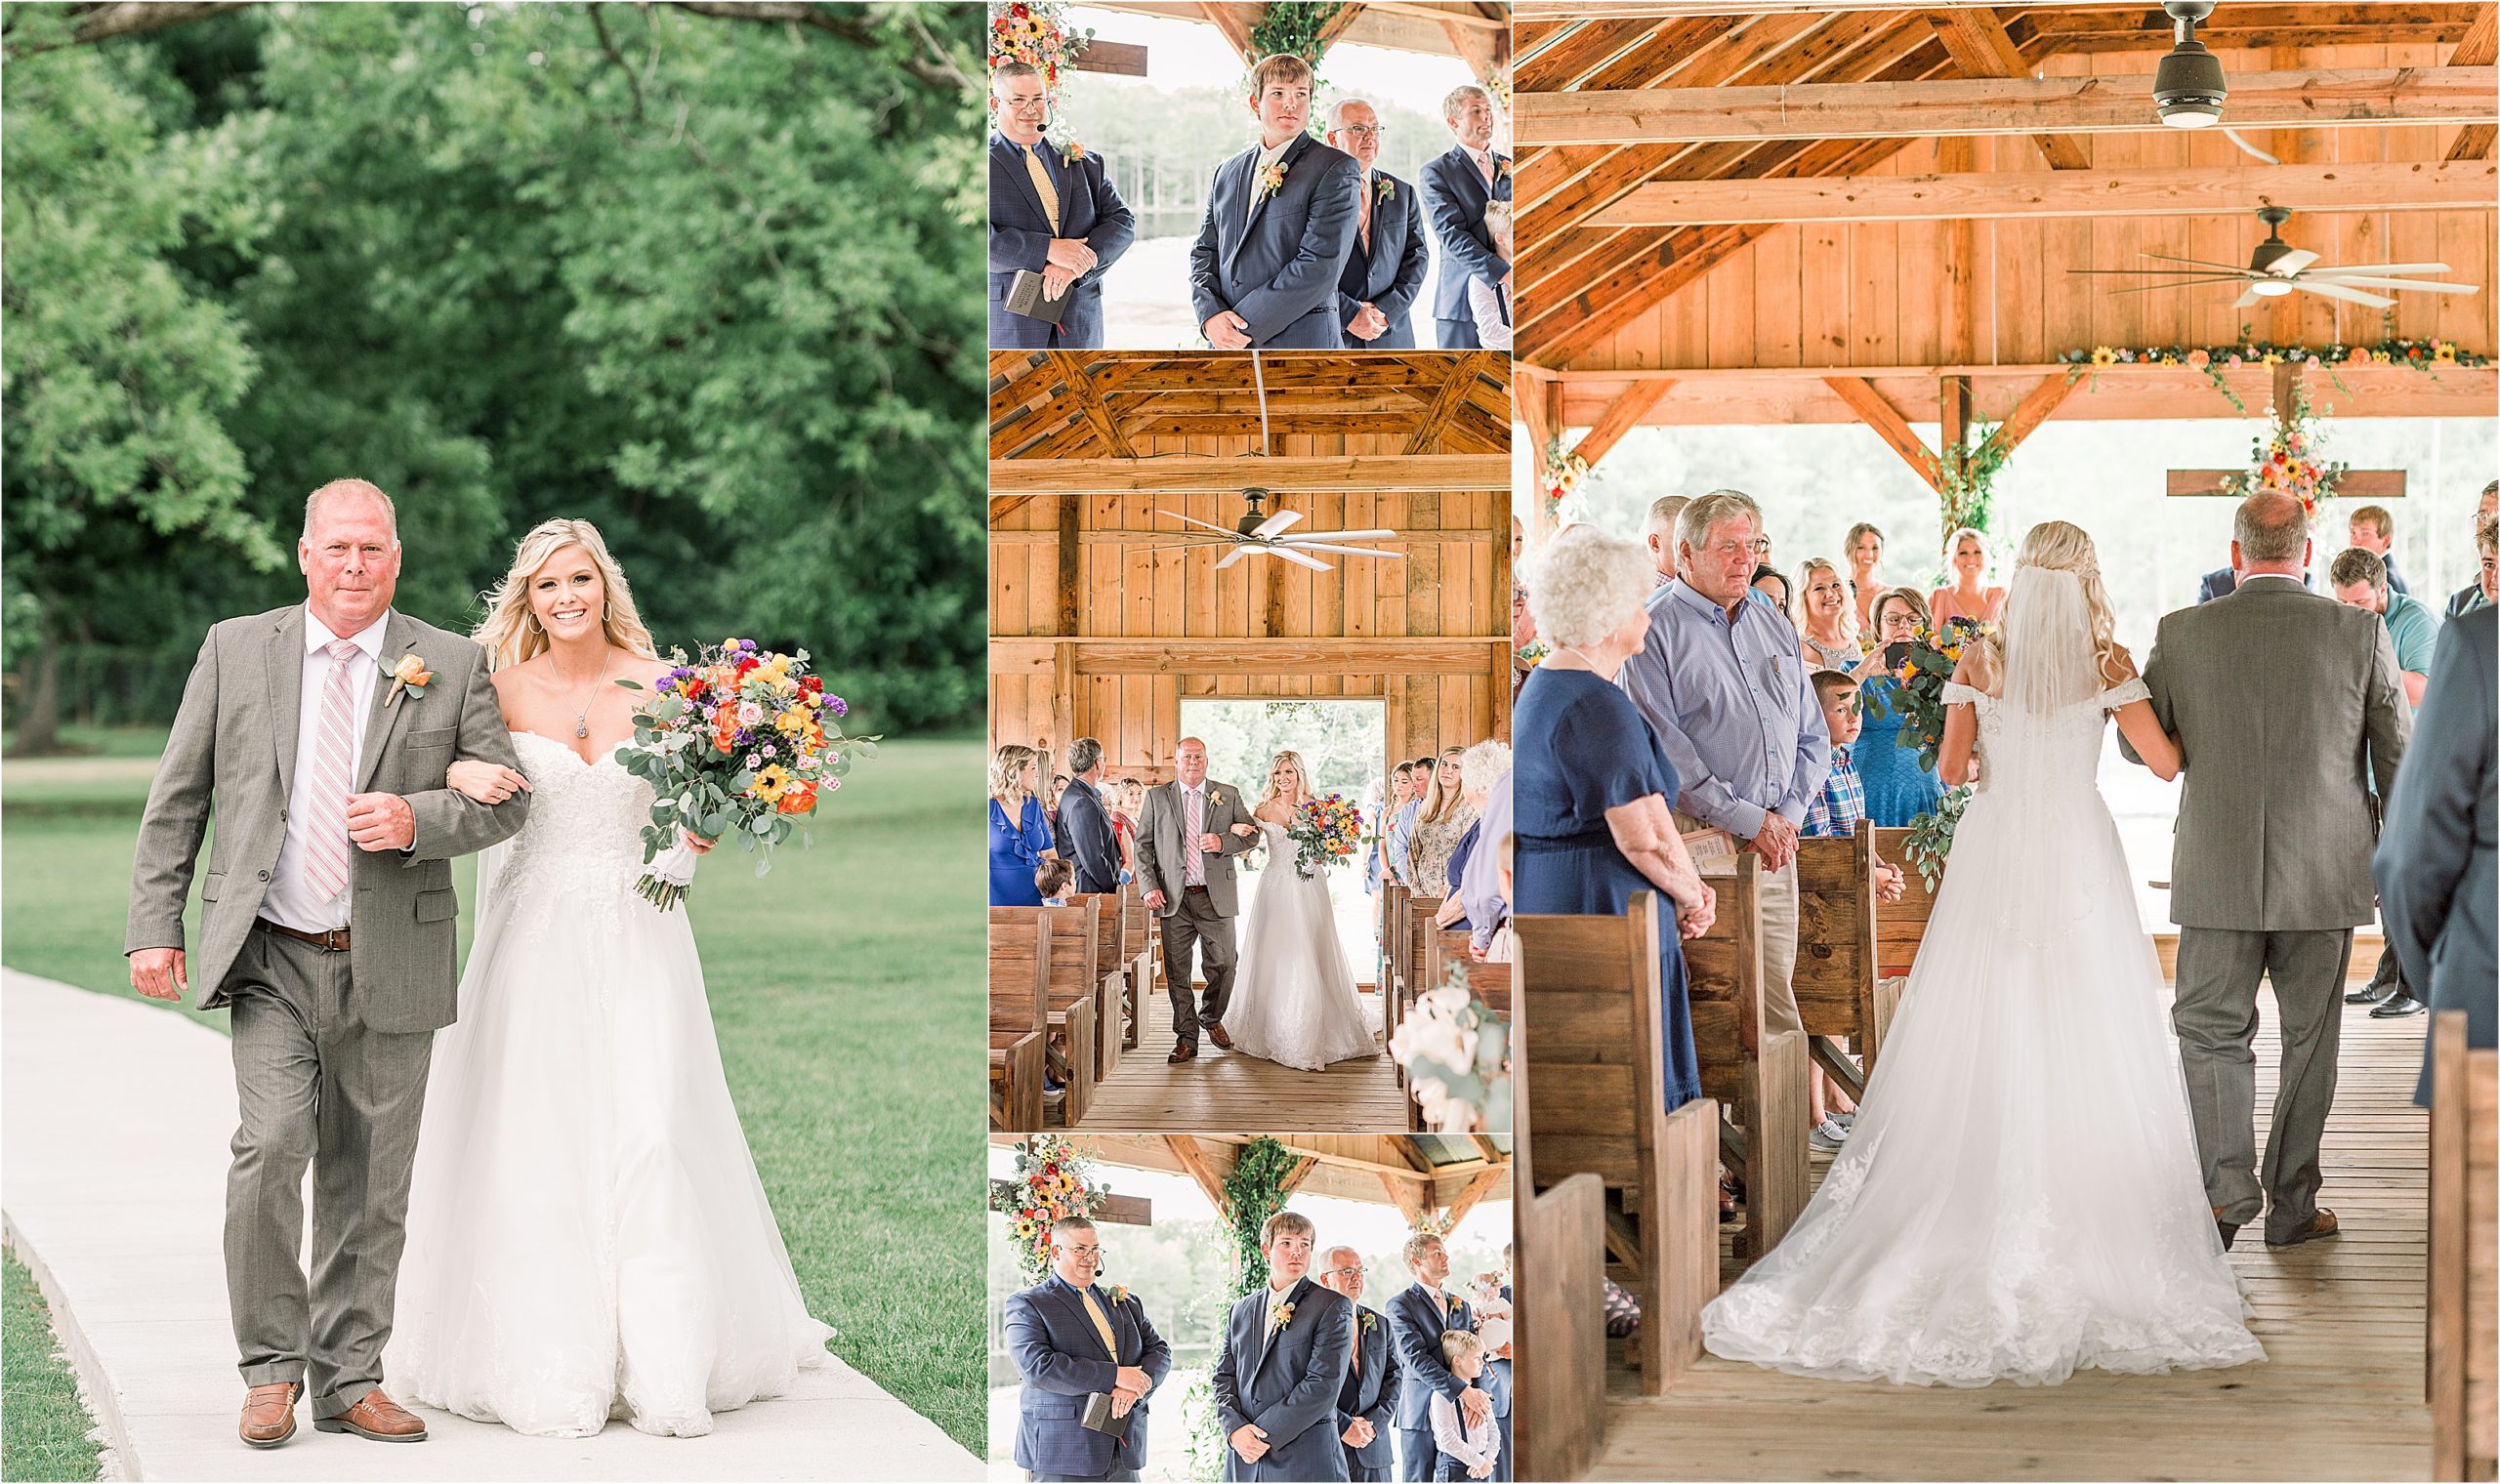 Georgia Wedding Photographer,Georgia Weddings,Light and Airy Photography,Rachel Linder Photography,Savannah Atlanta Macon Wedding Photographer,